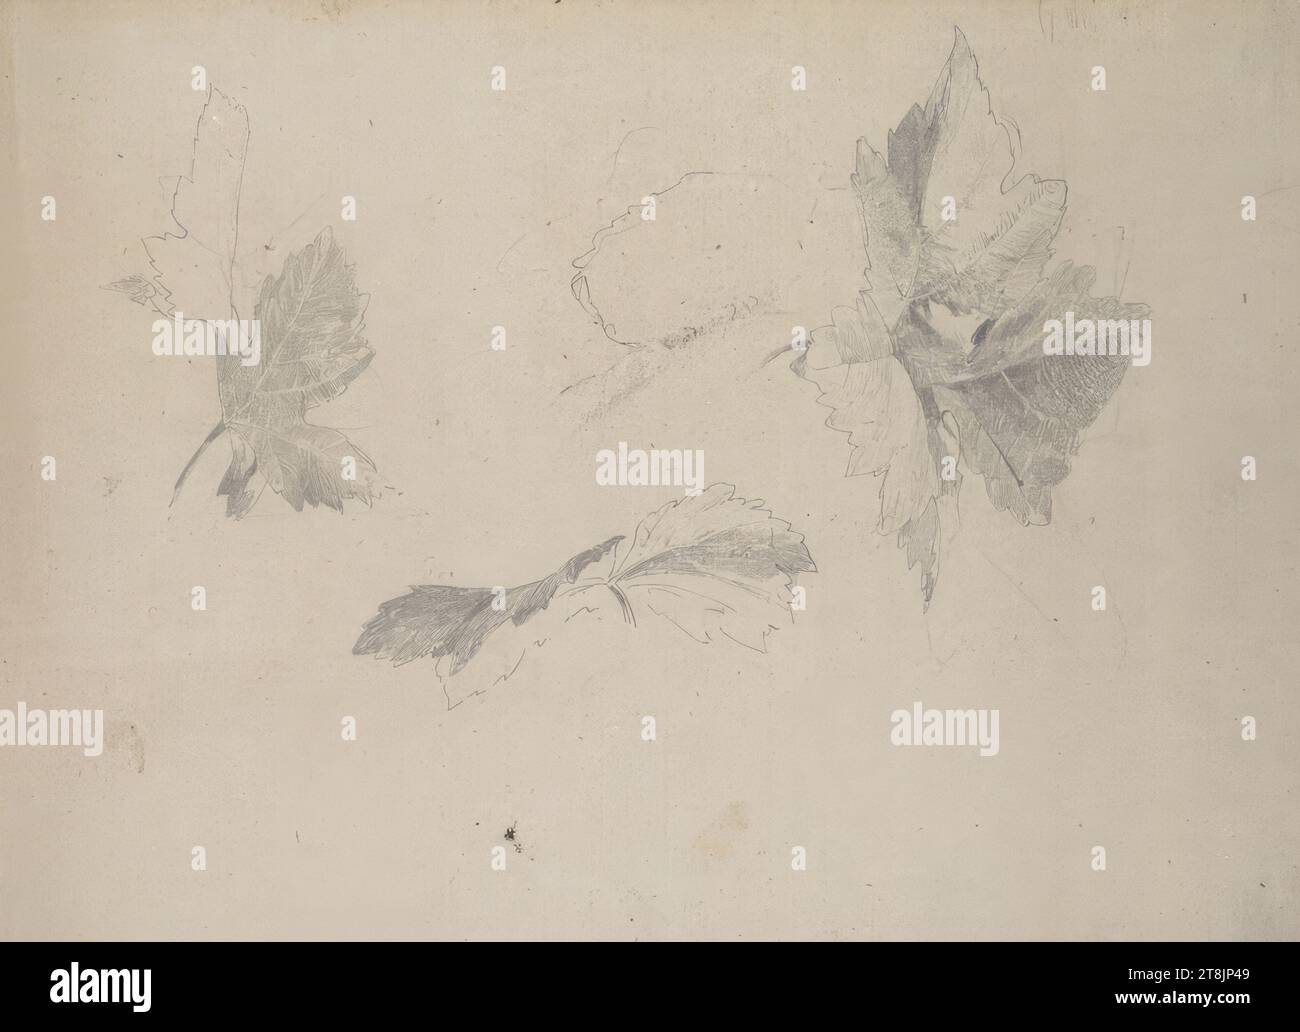 Plant studies, sketchbook Rösch Ludwig; 39 paginated pages, Ludwig Rösch, Vienna 1864 - 1936 Vienna, sketchbook: 1882-1885, drawing, pencil, sheet: 25.8 x 35.5 cm, Austria Stock Photo